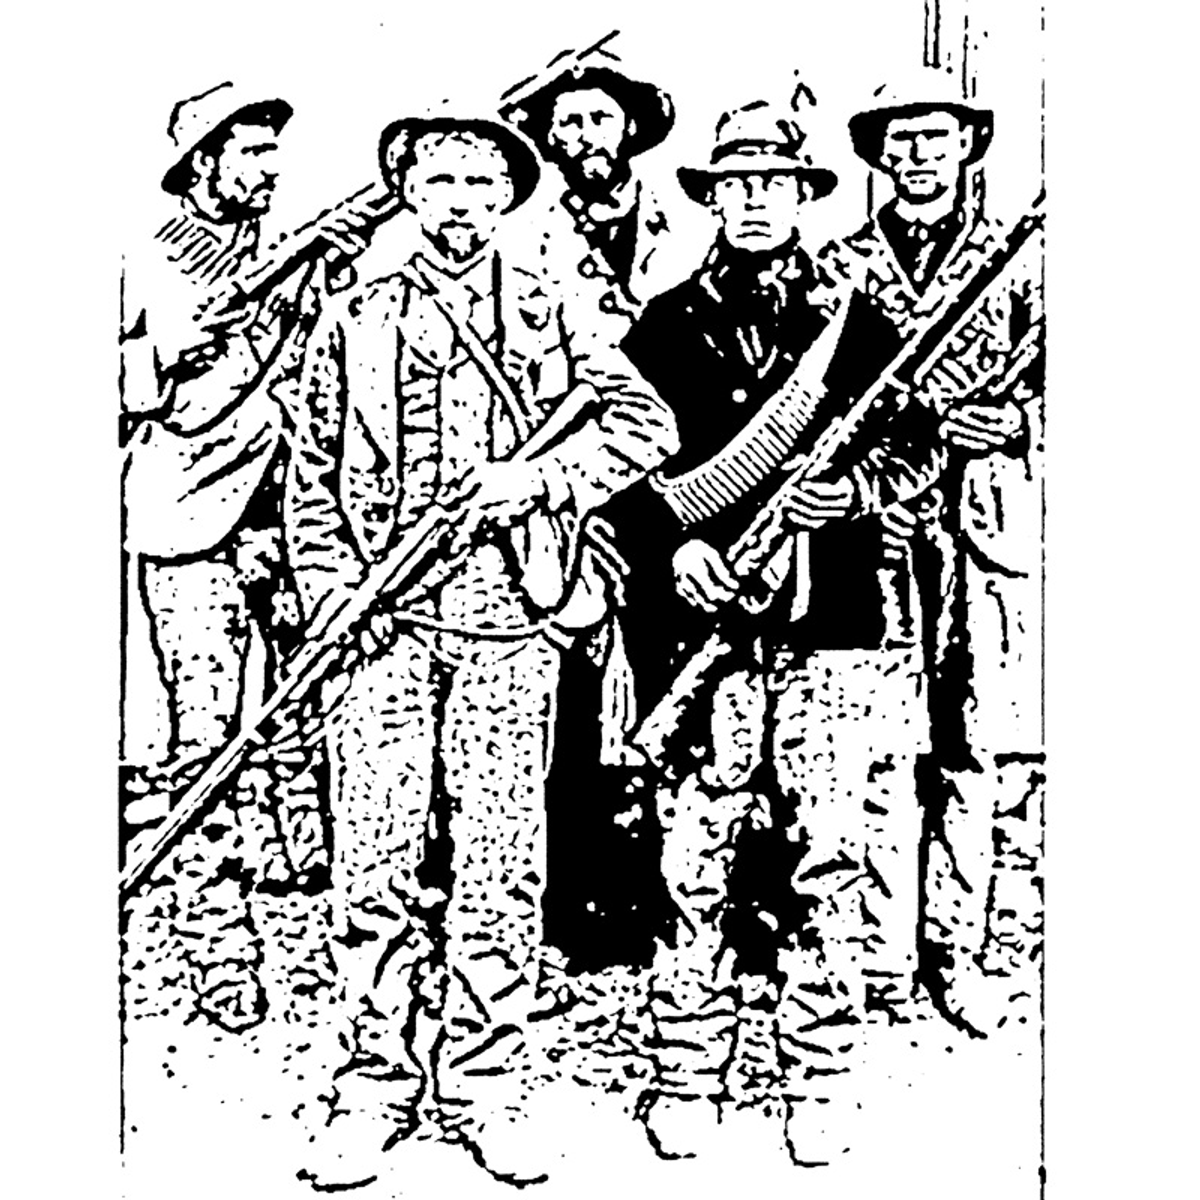 1904, Boers war, South Africa